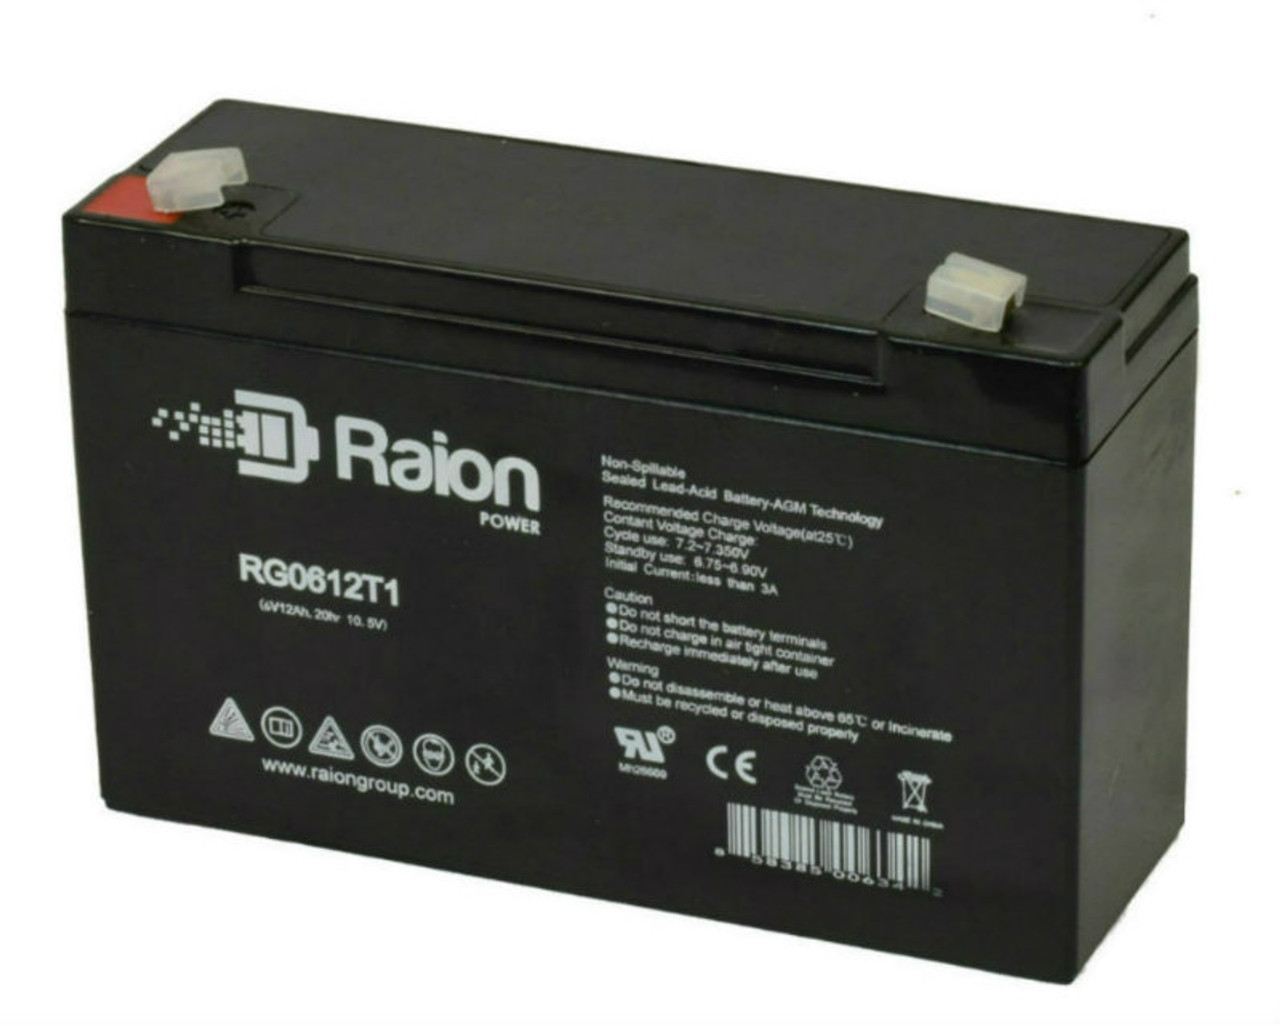 Raion Power RG06120T1 Replacement 6V 12Ah Emergency Light Battery for Sonnenschein MINIGUARD